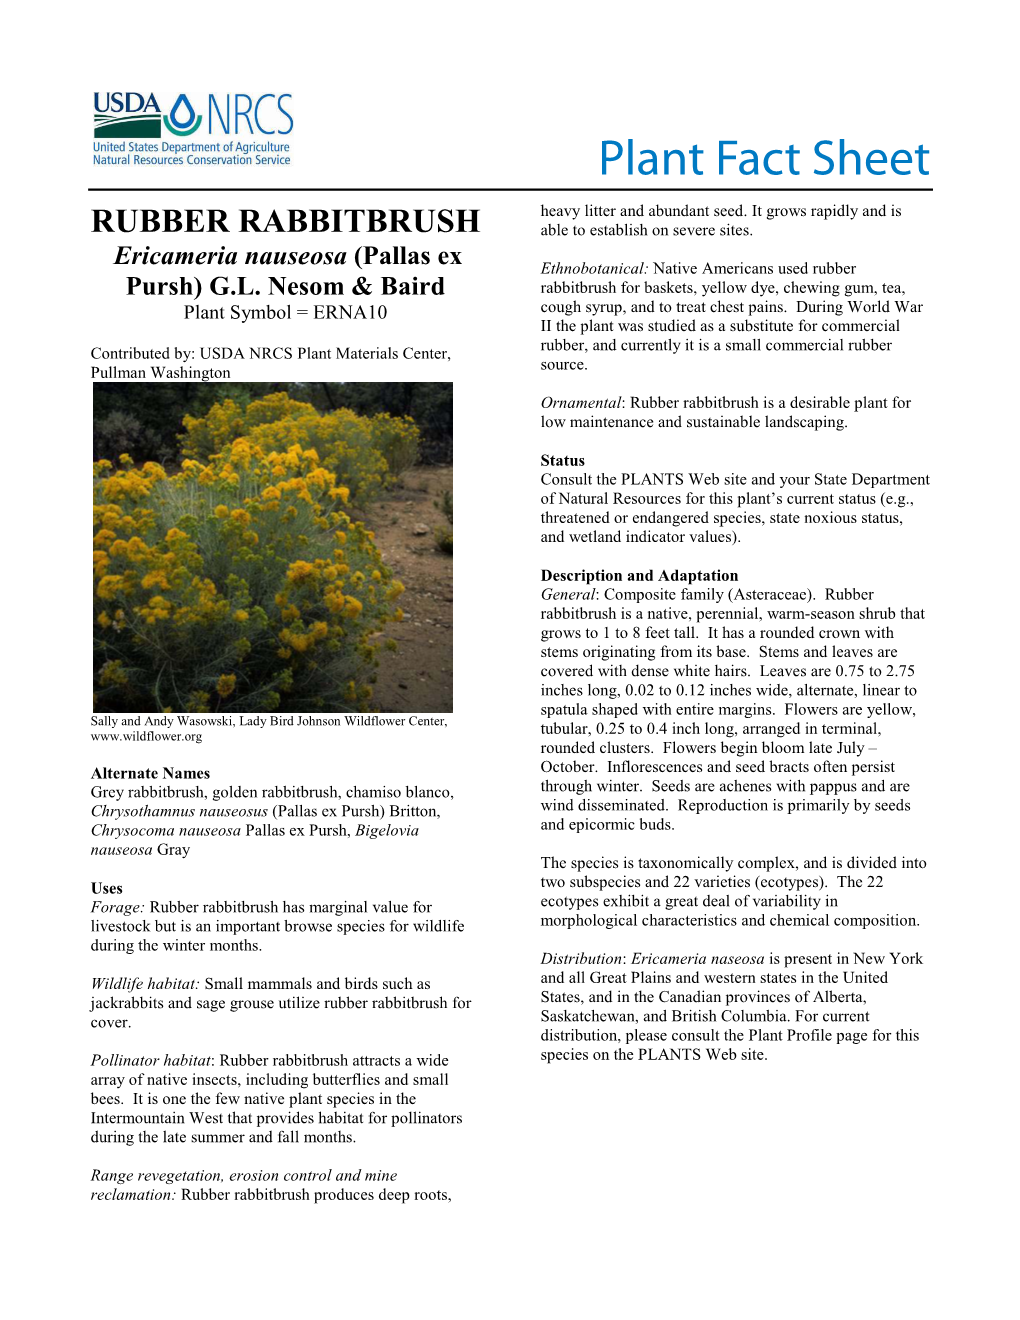 Rubber Rabbitbrush (Ericameria Nauseosa) Fact Sheet